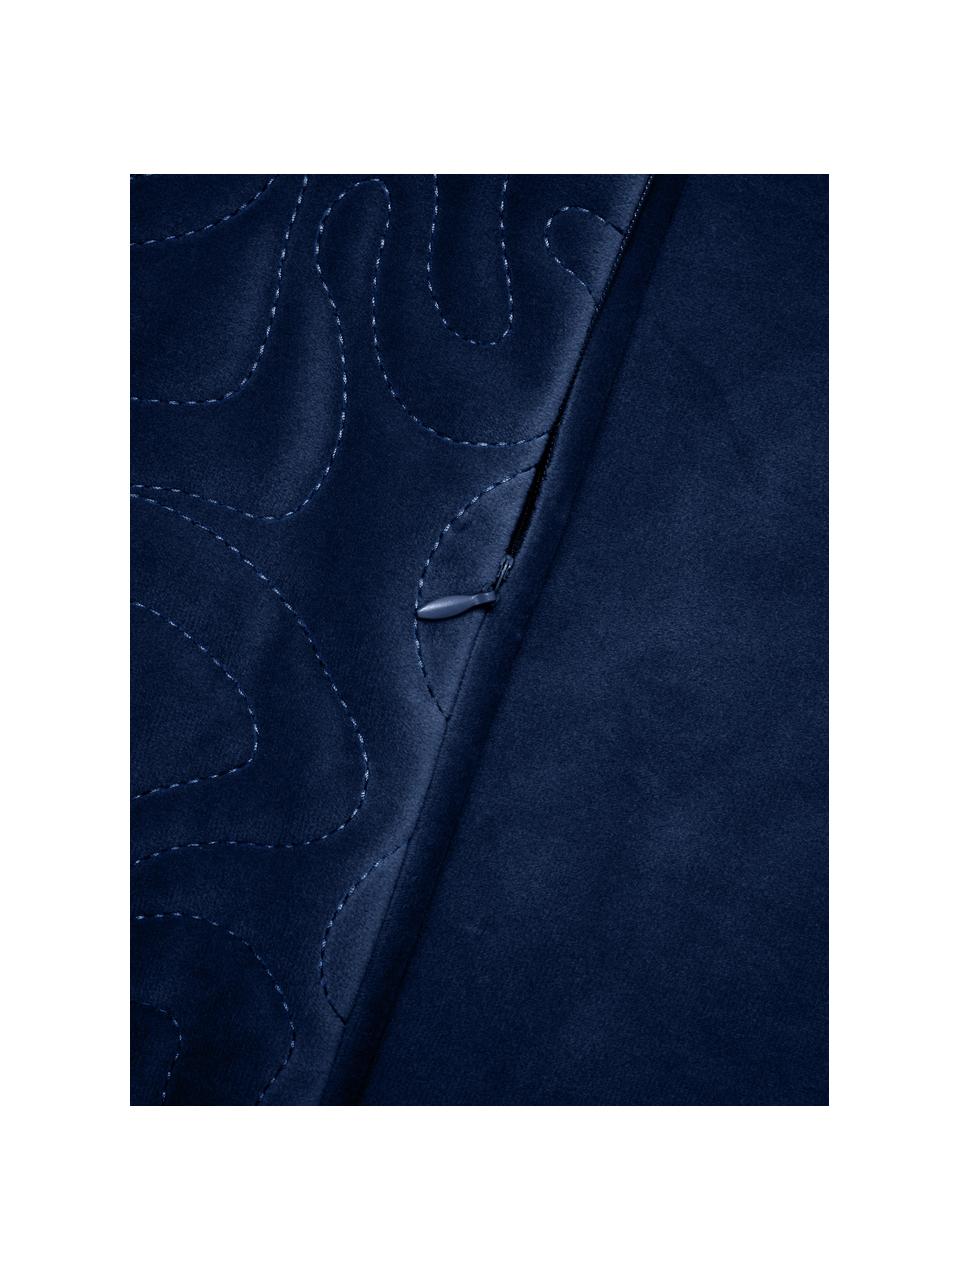 Fluwelen kussenhoes Hera met decoratie in donkerblauw, 100 % gerecycled polyester, Donkerblauw, B 45 x L 45 cm